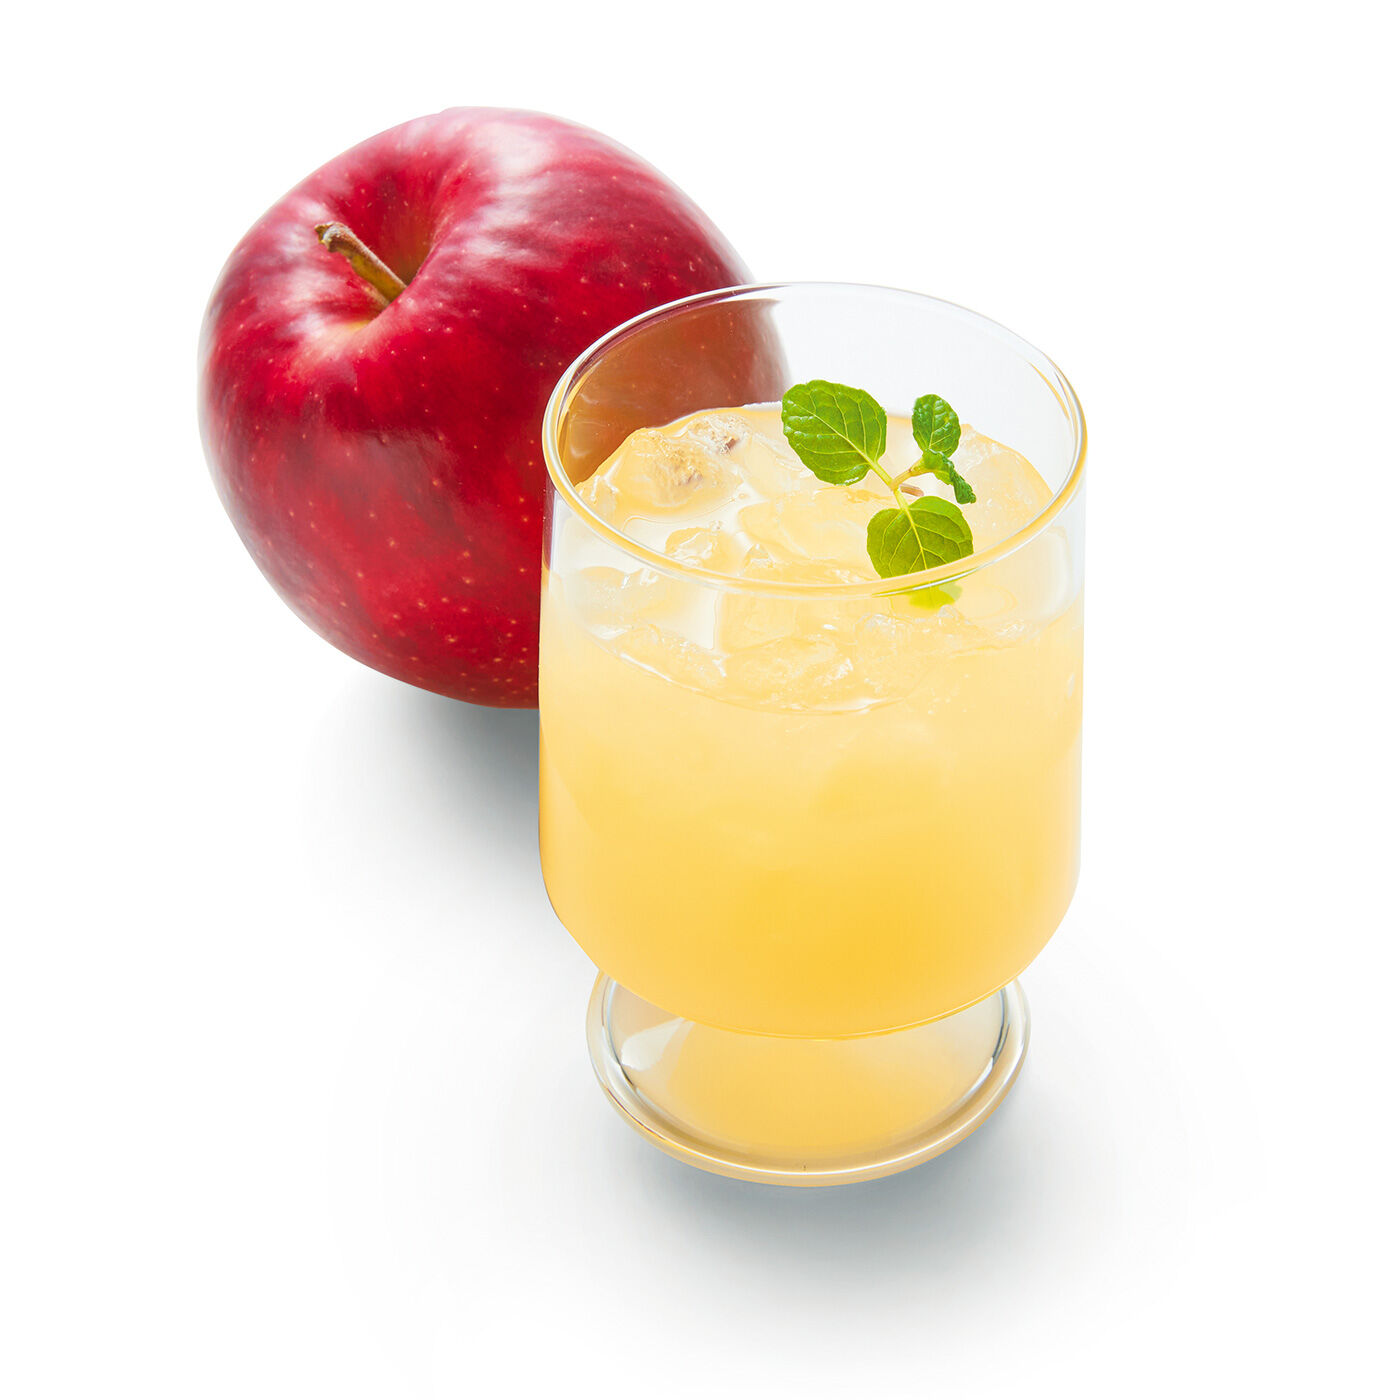 FELISSIMO PARTNERS|100年続くりんご農園のApple juice 食物繊維plusの会（3回予約）|水溶性食物繊維を3g配合